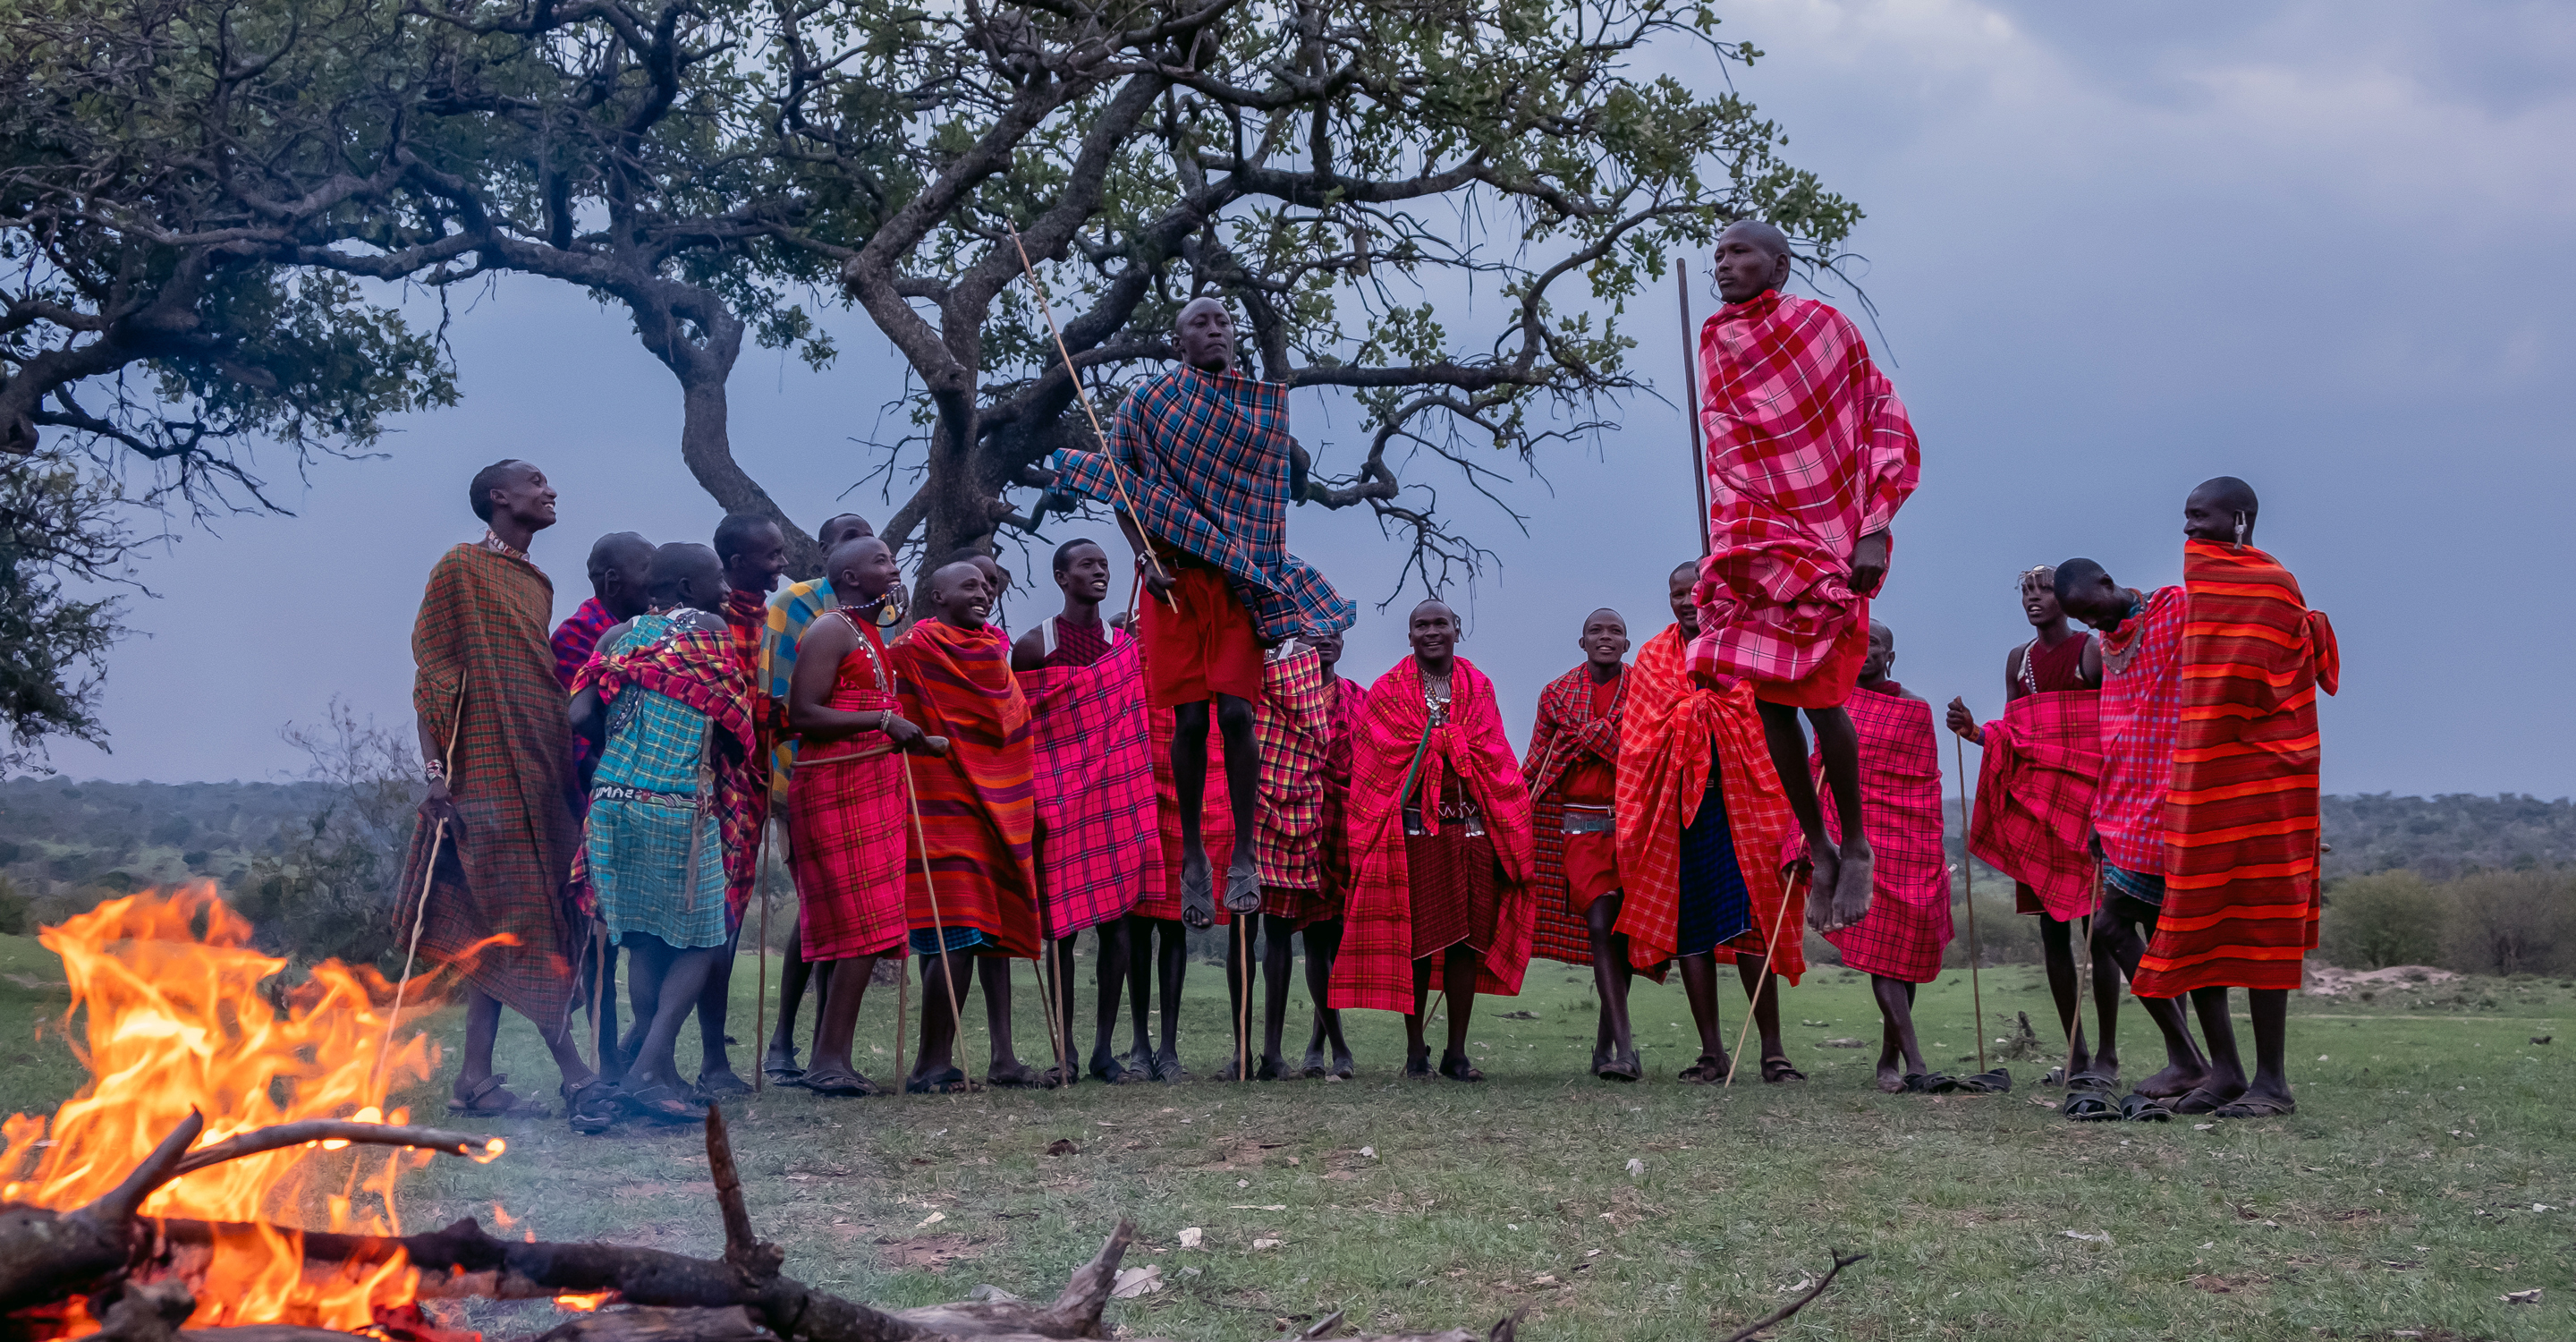 Maasai warriors perform a demonstration near a campfire in the Maasai Mara National Reserve, Kenya